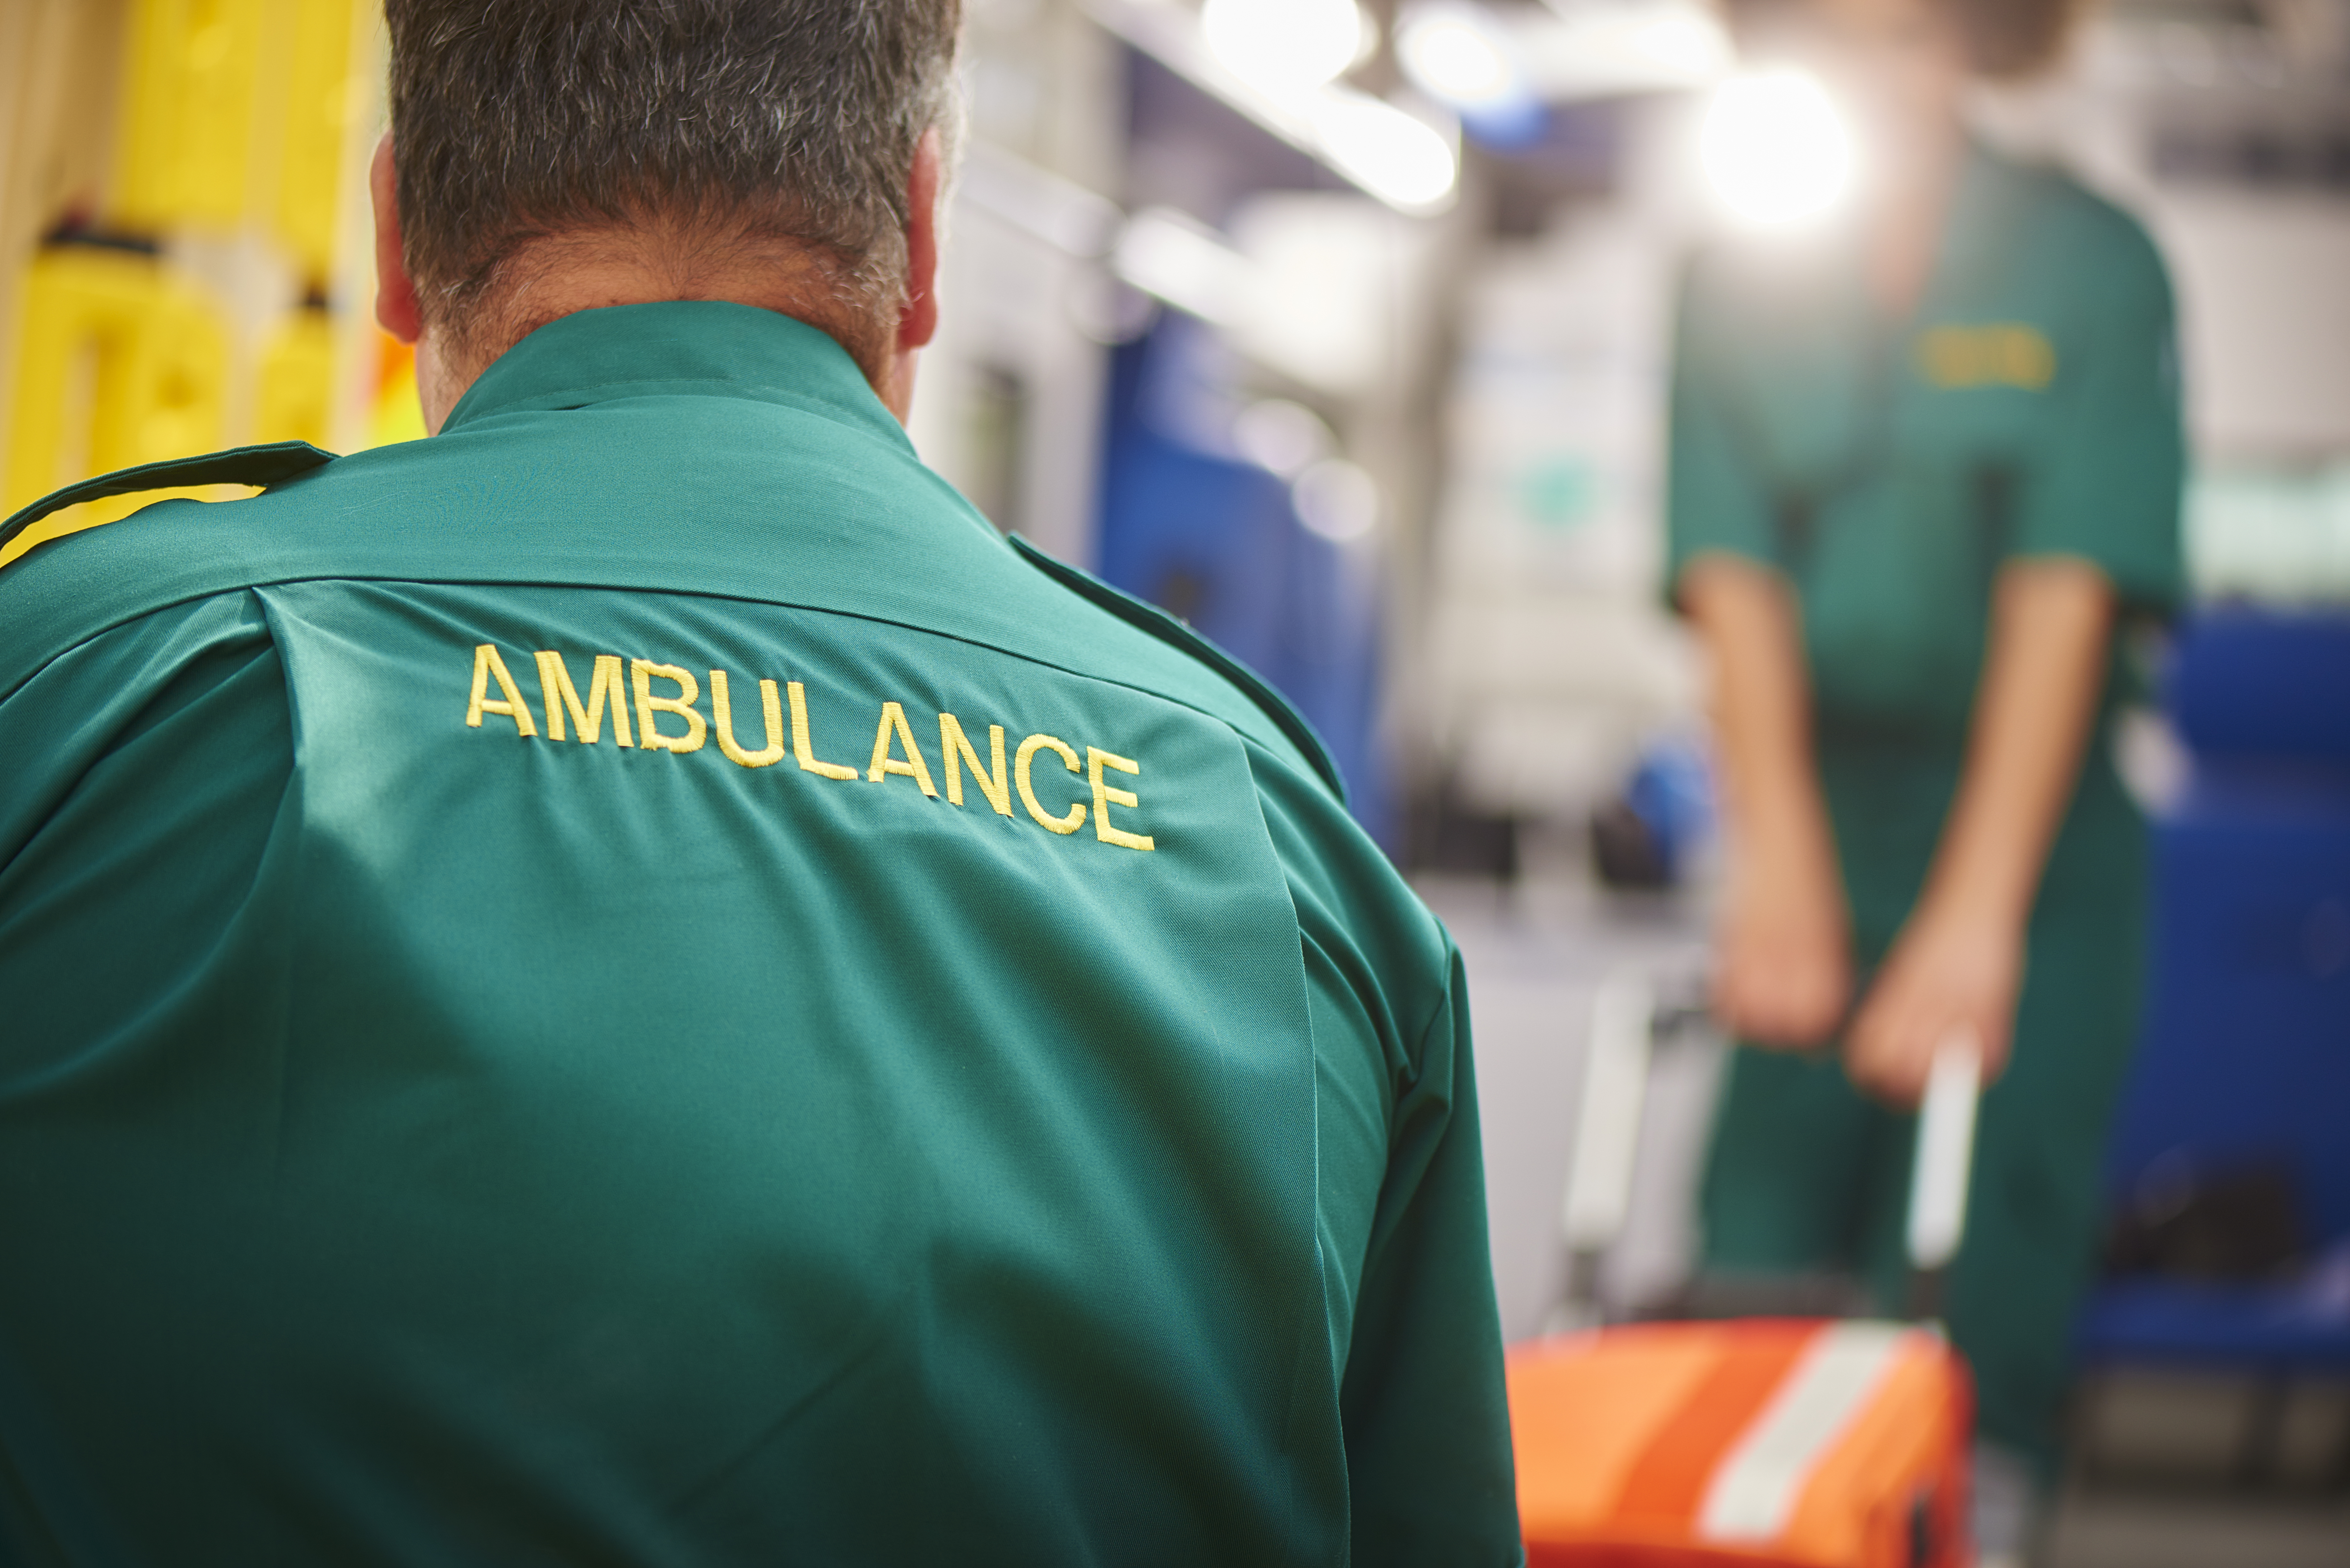 Ambulance first aid guidance